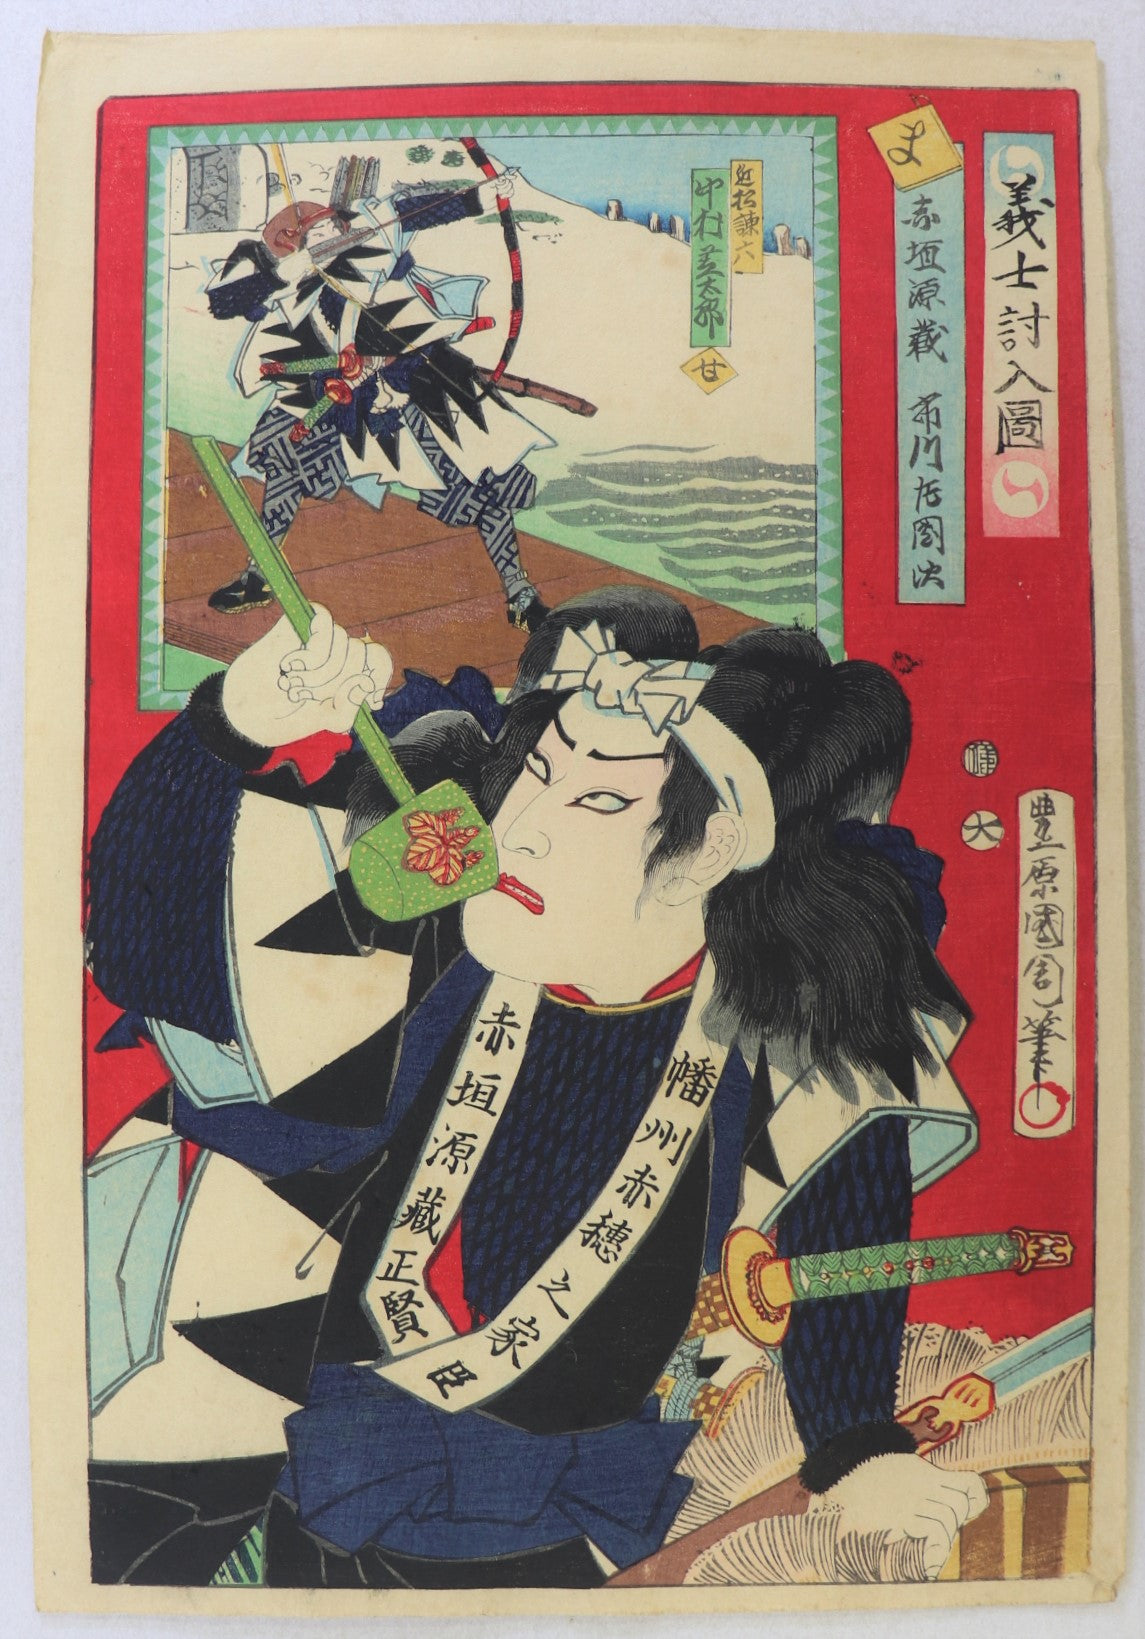 Ichikawa Sadanji as Akagaki Genzo from the series "Illustration of faithful Samurais  by Kunichika / Ichikawa Sadanji dans le rôle de Chikamatsu Kanroku de la série " Illustration des loyaux Samourais  "par Kunichika (1872)